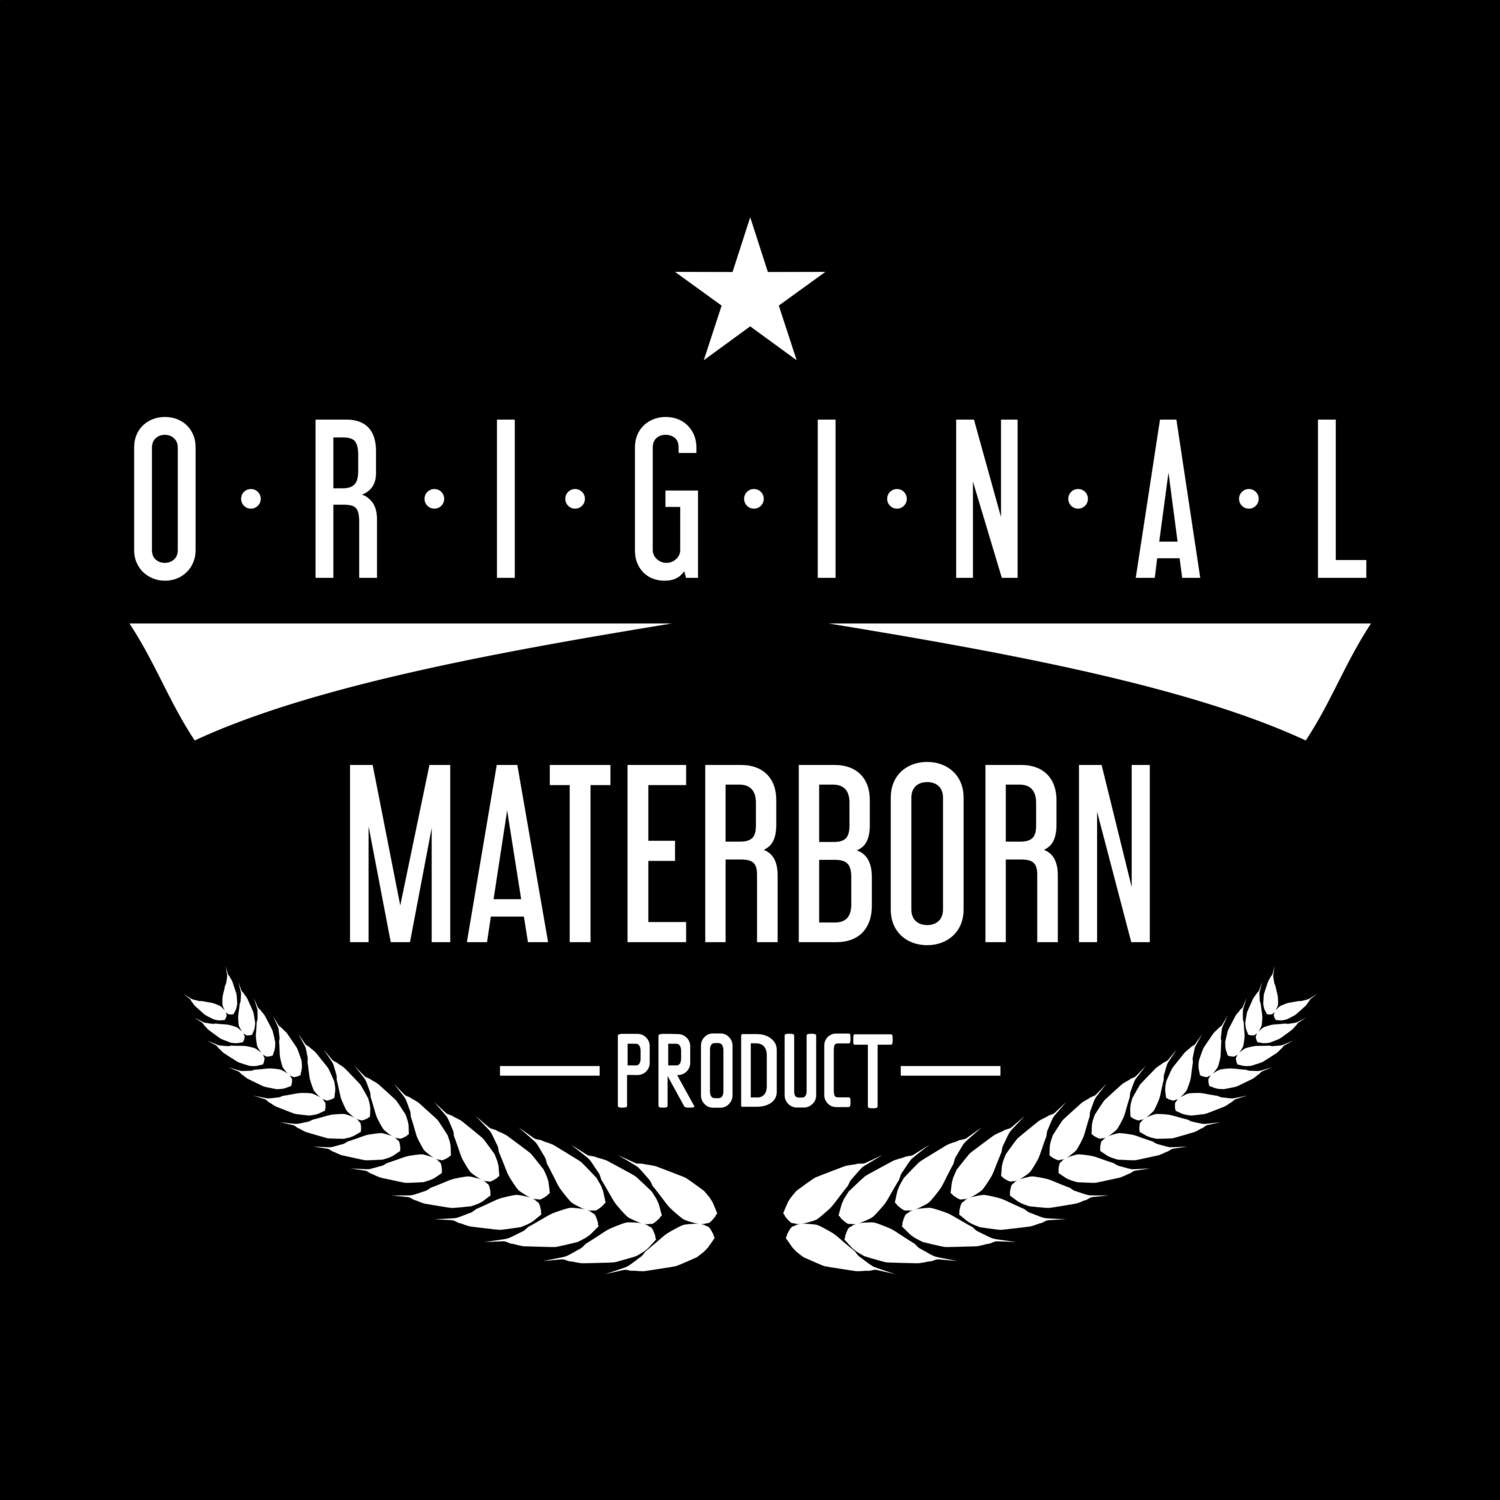 Materborn T-Shirt »Original Product«